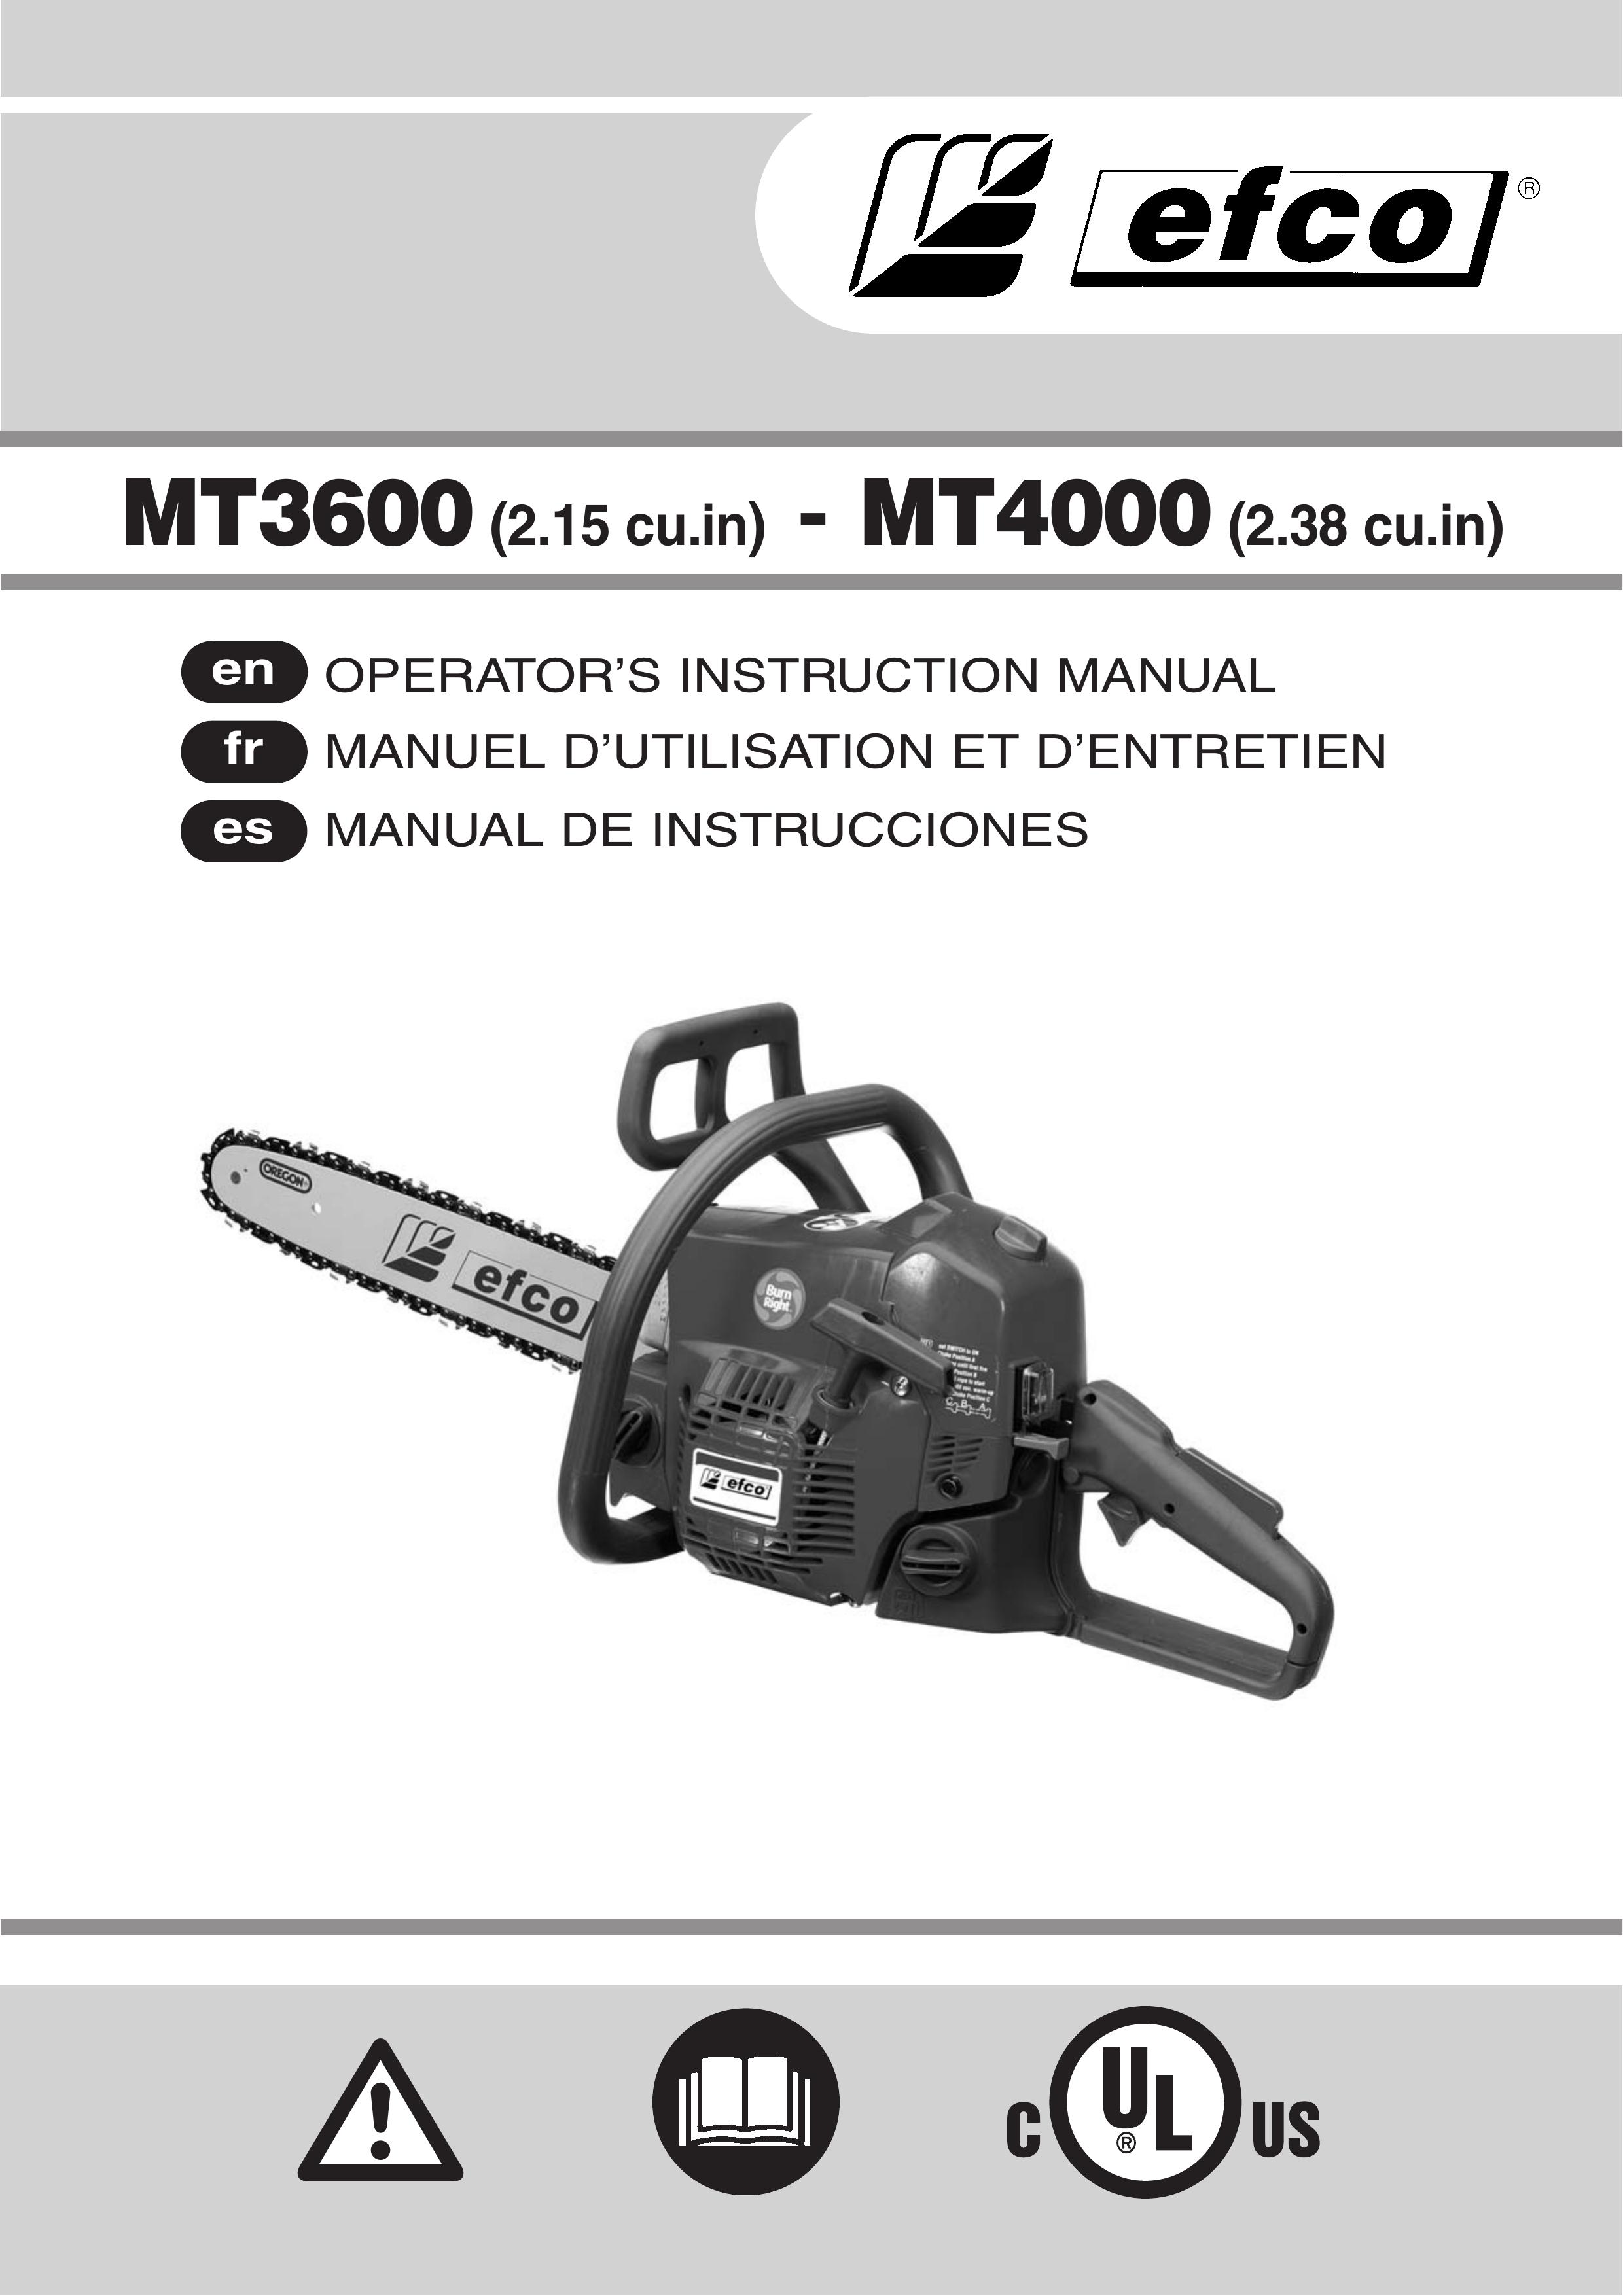 EMAK MT3600 Chainsaw User Manual